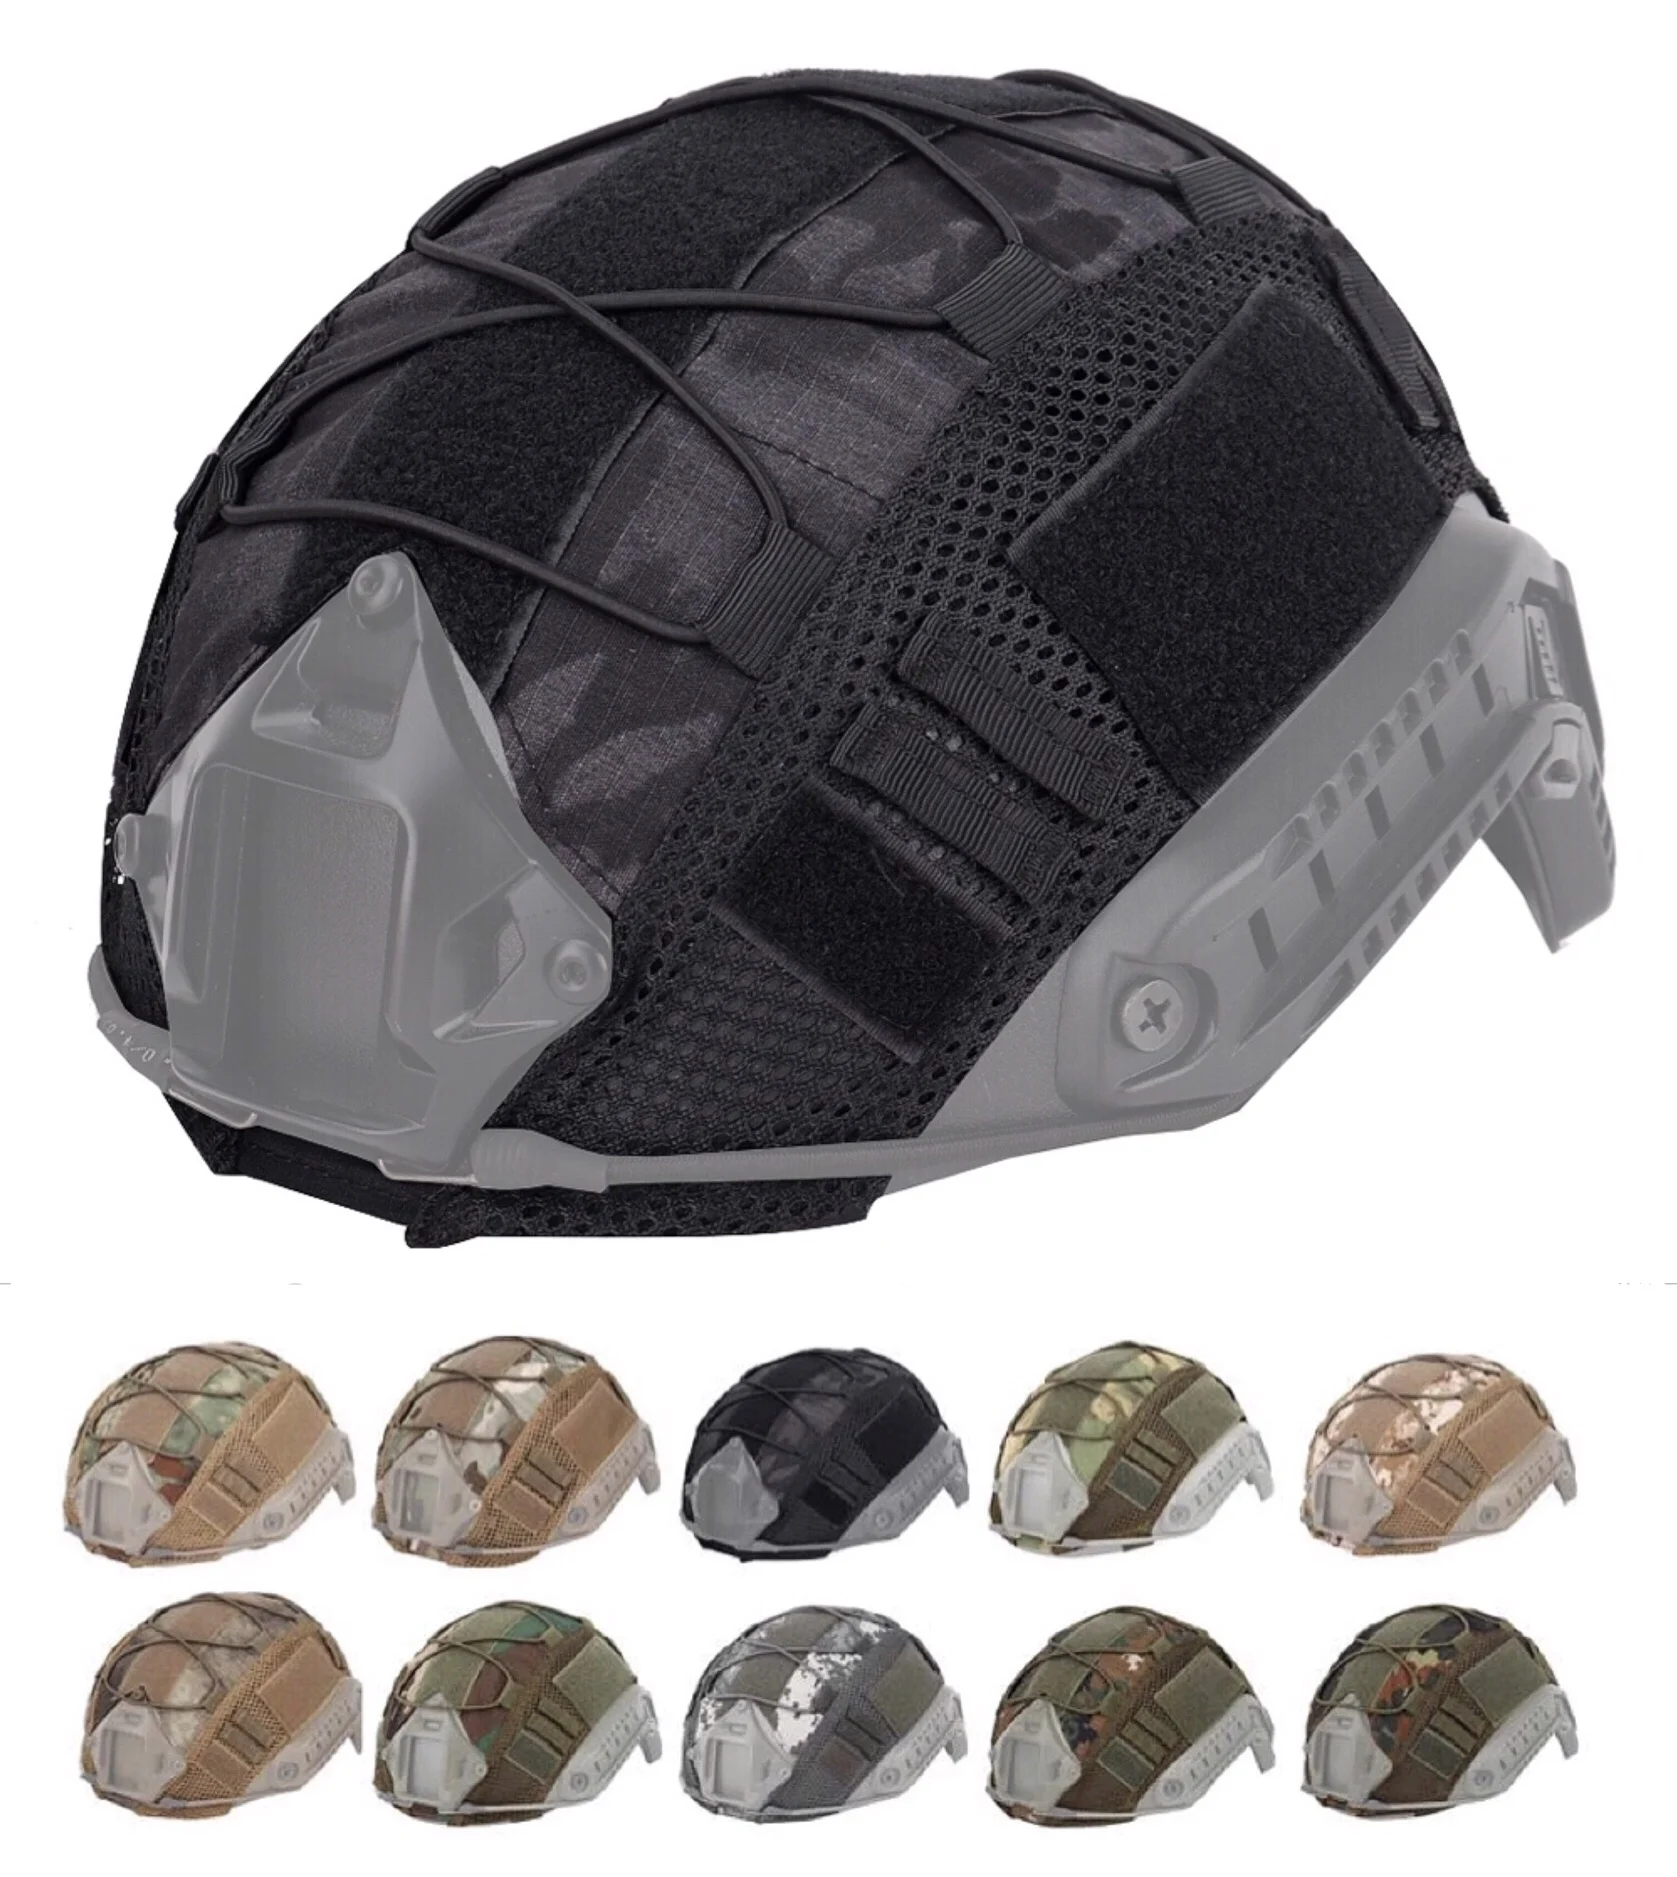 FMA Tactical Ballistic helmet cover For FAST Helmet Sports Headwear Hunting Gear 